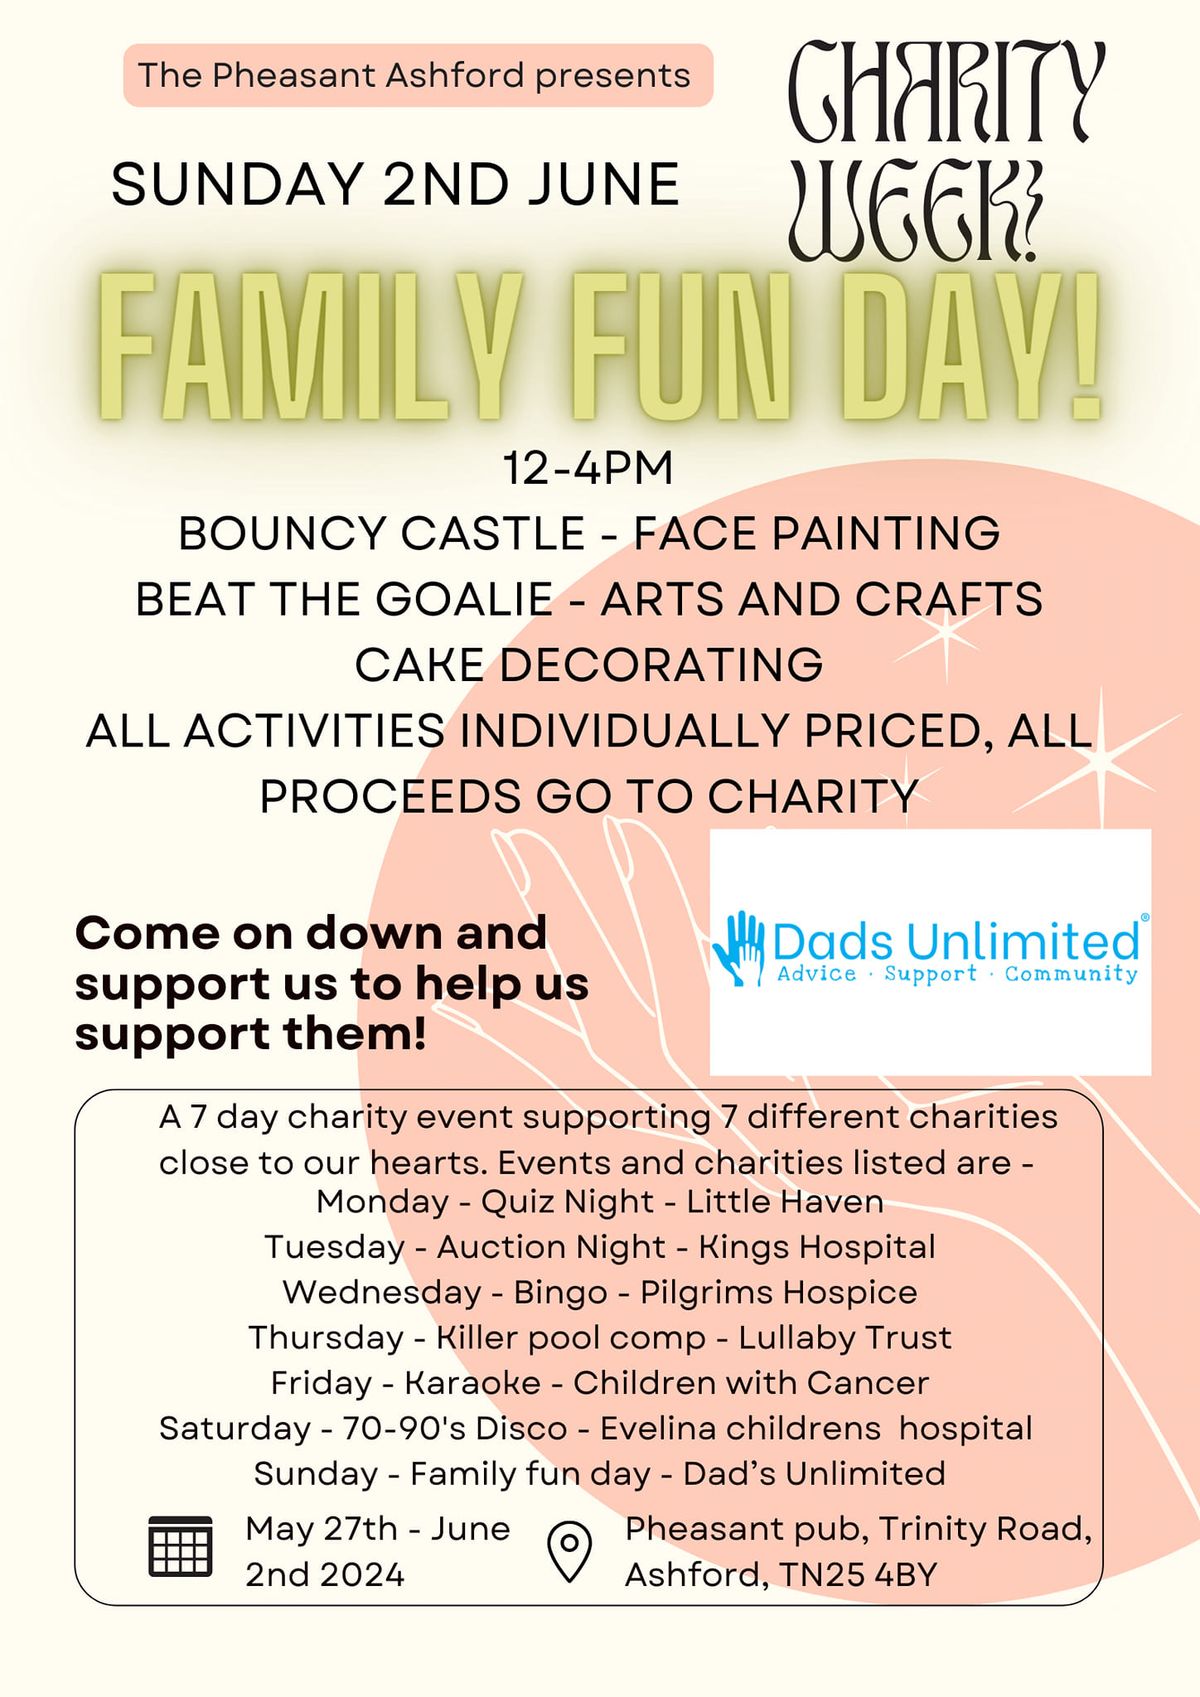 Family Fun Day - Charity Week 